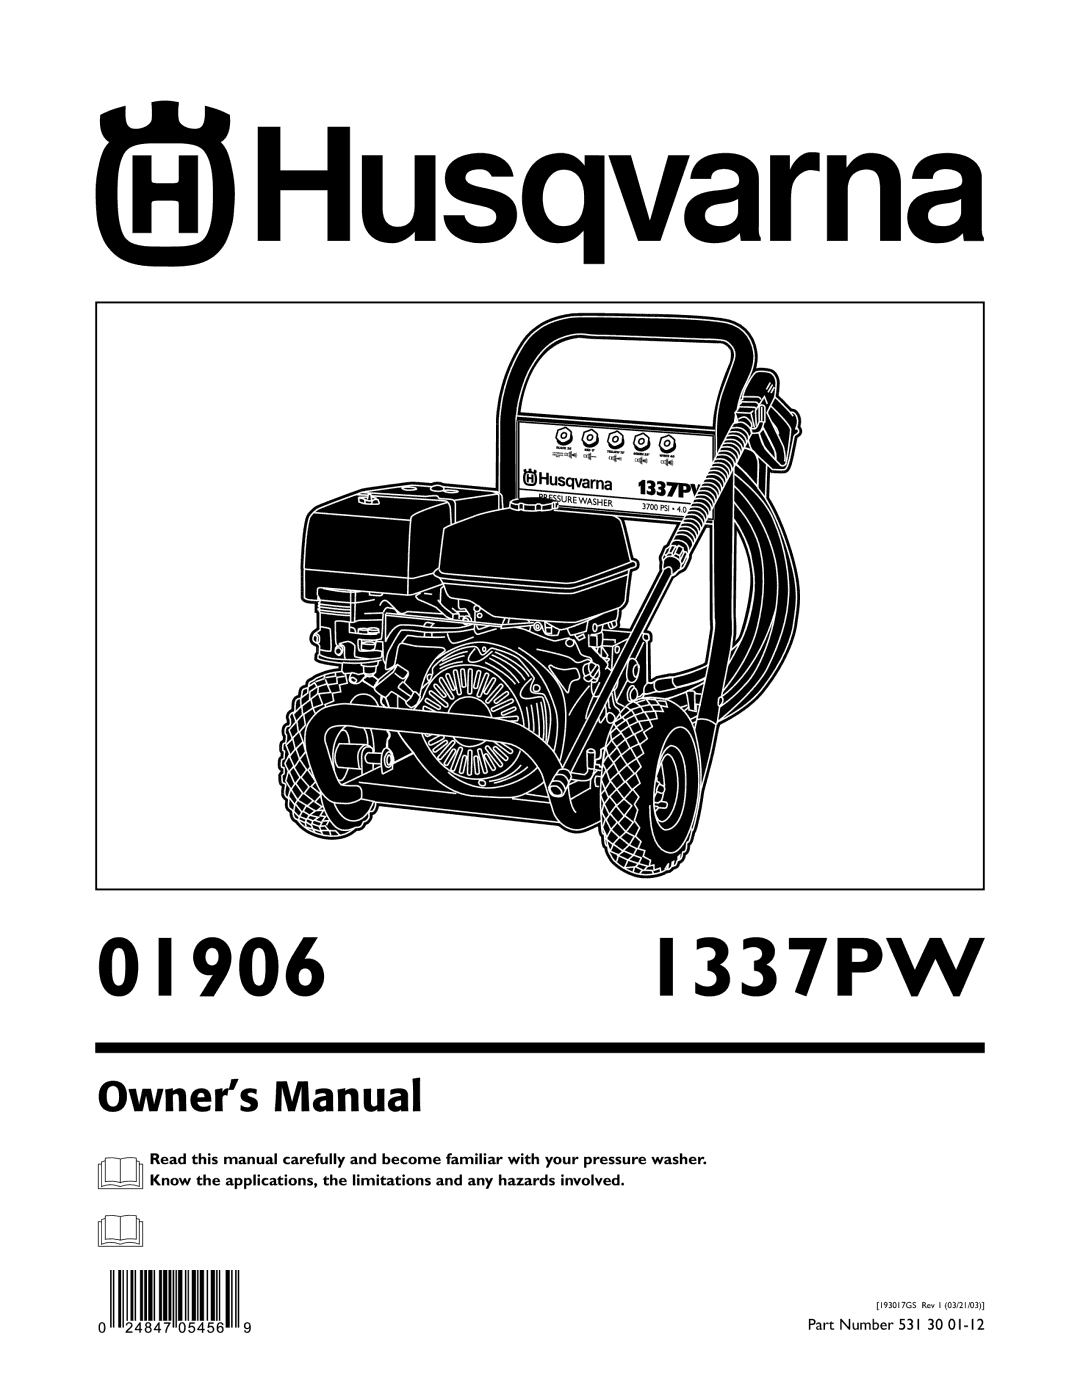 Husqvarna owner manual 01906 1337PW 